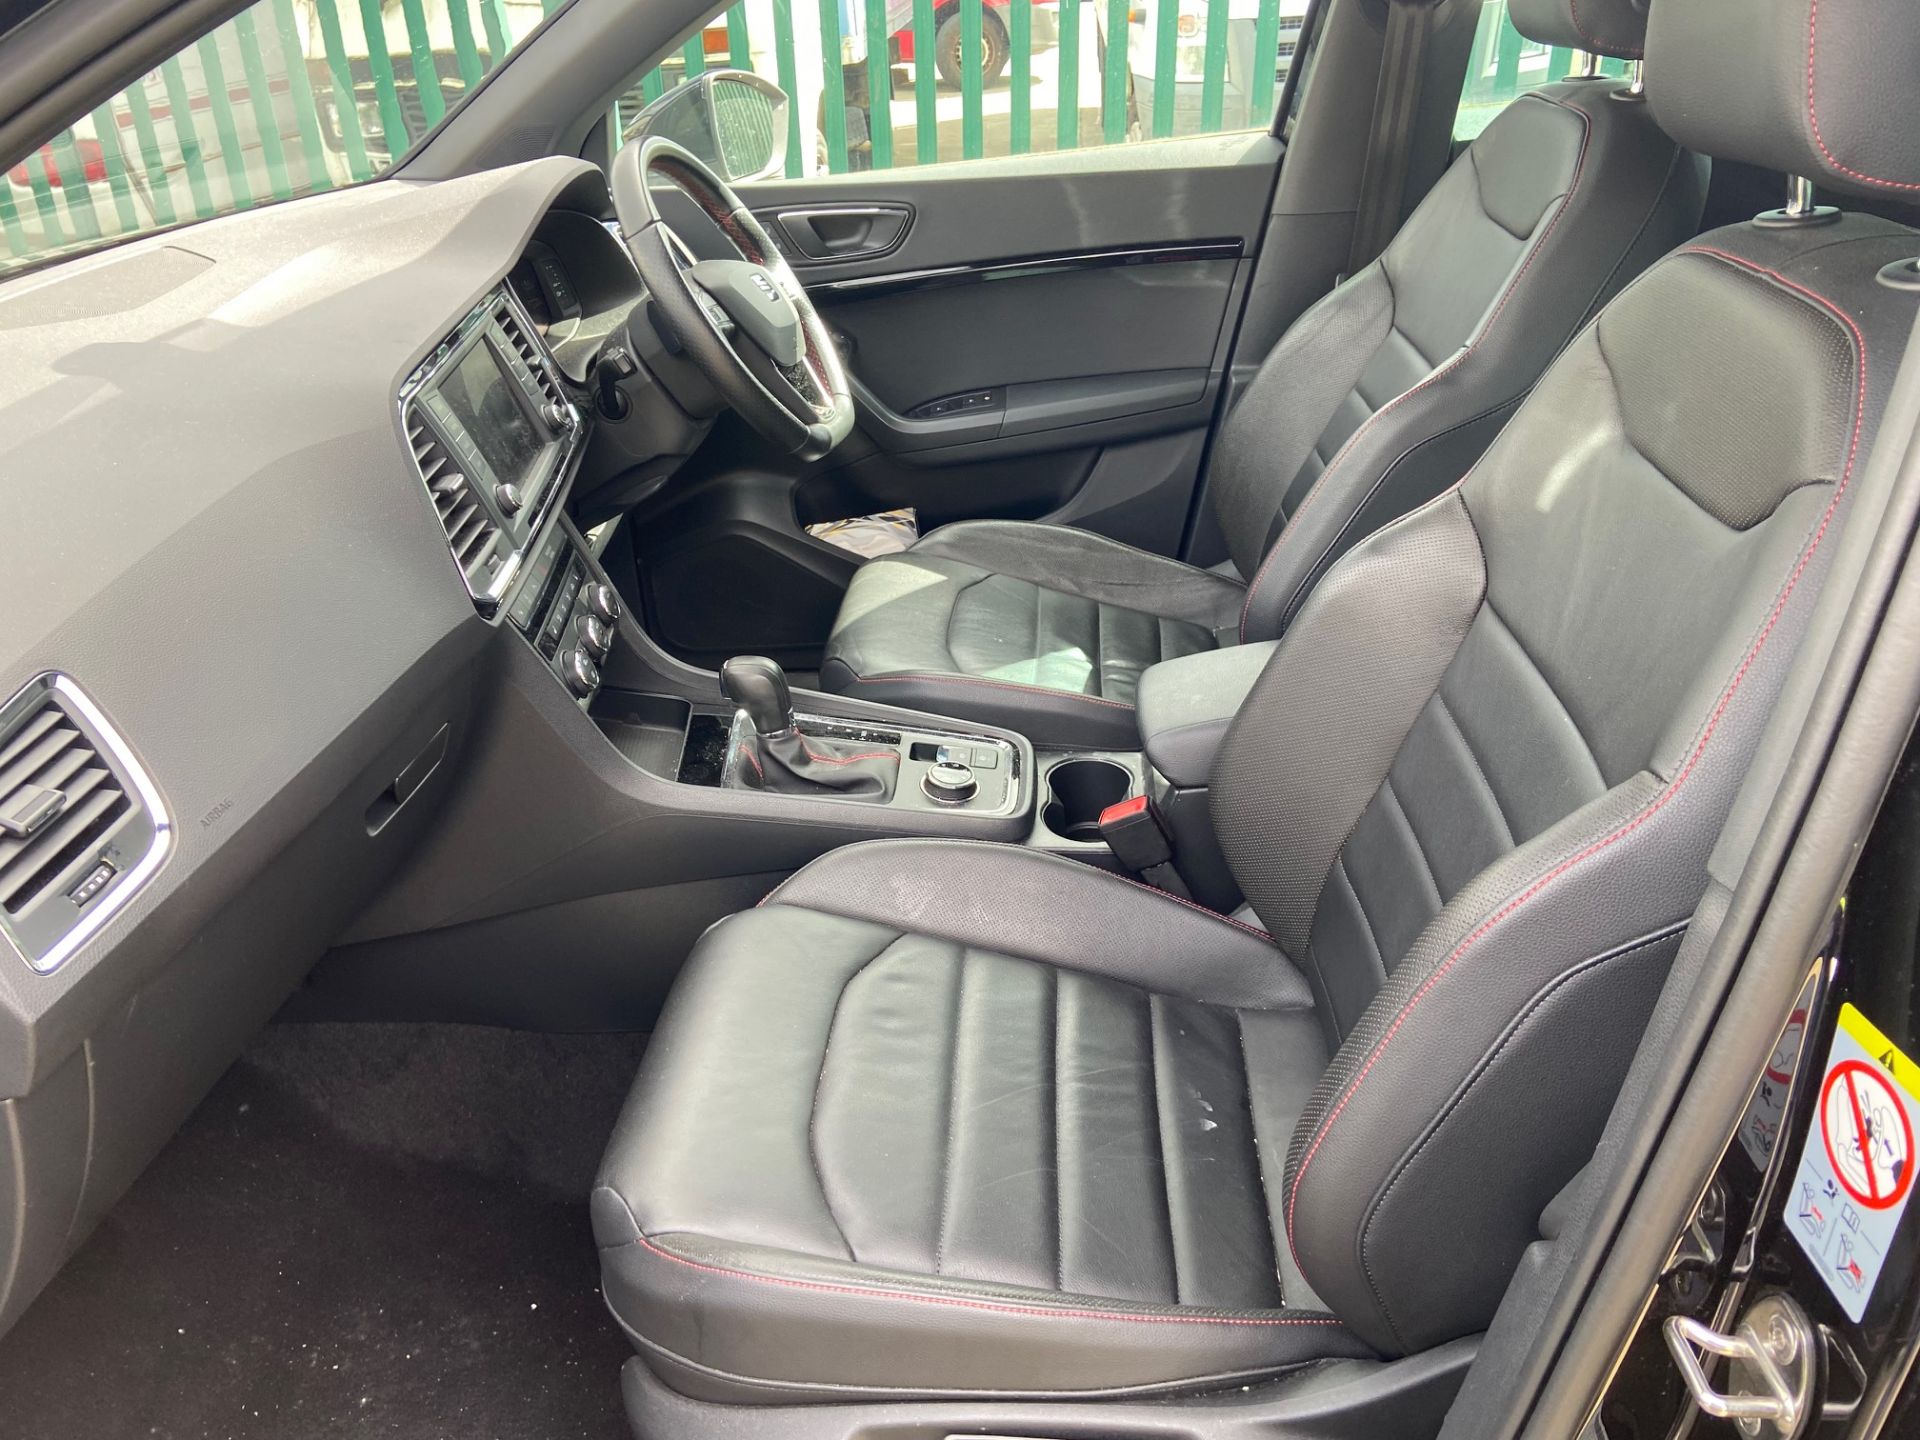 SEAT ATECA (YOM 2019) FR SPORT TSi 4 DRIVE 2.0 five door hatchback - petrol - black. - Bild 12 aus 13